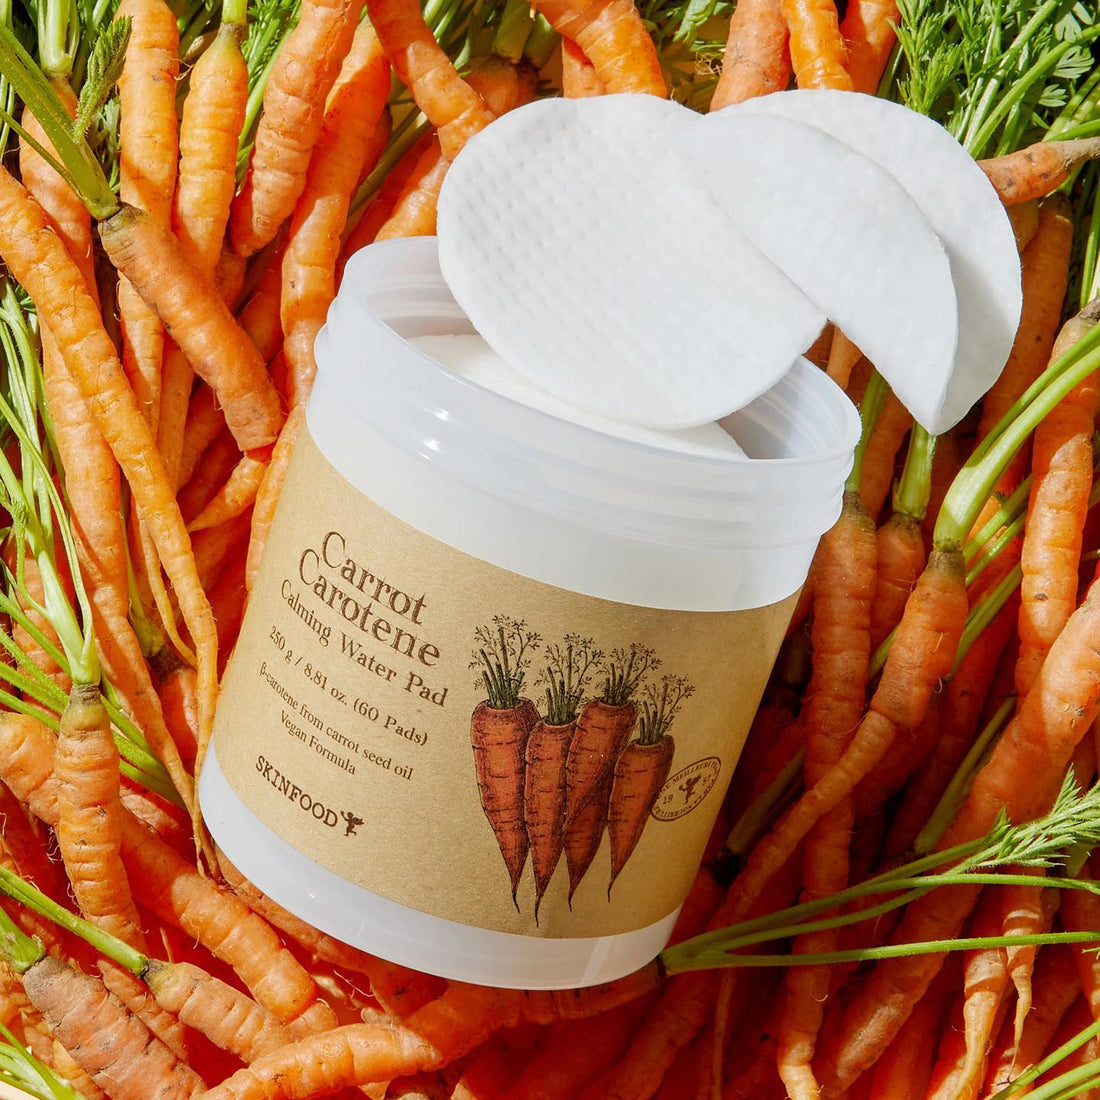 SKINFOOD Carrot Carotene Calming Water Pad 60pads